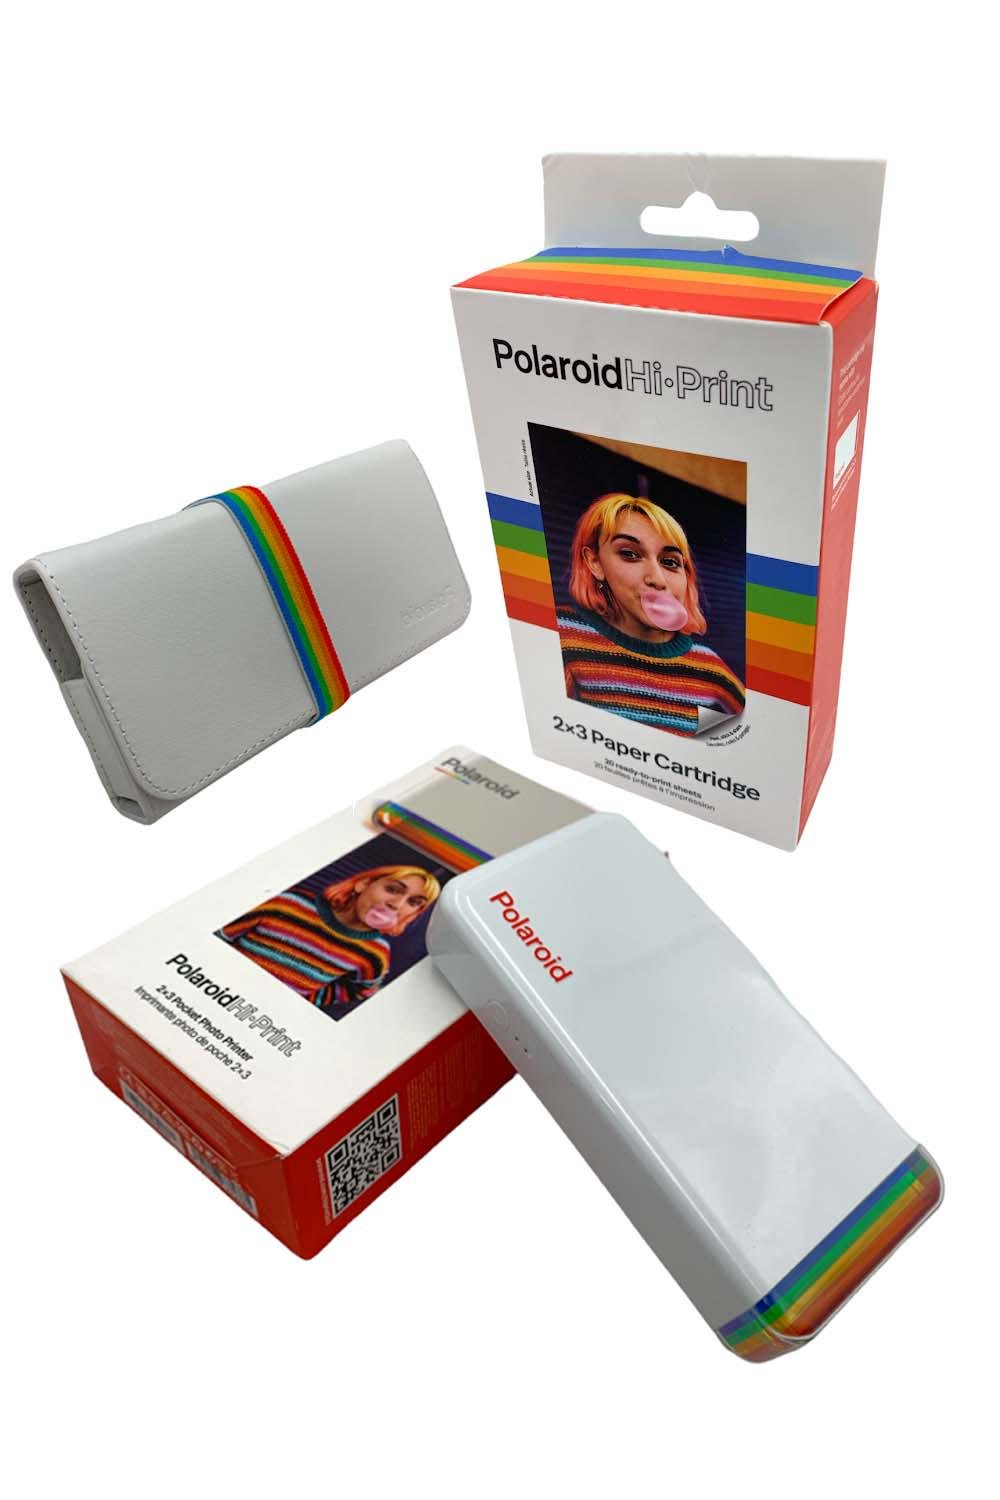 Polaroid Hi-Print 2x3 Pocket Photo Printer + 20 Sheets Photo Paper